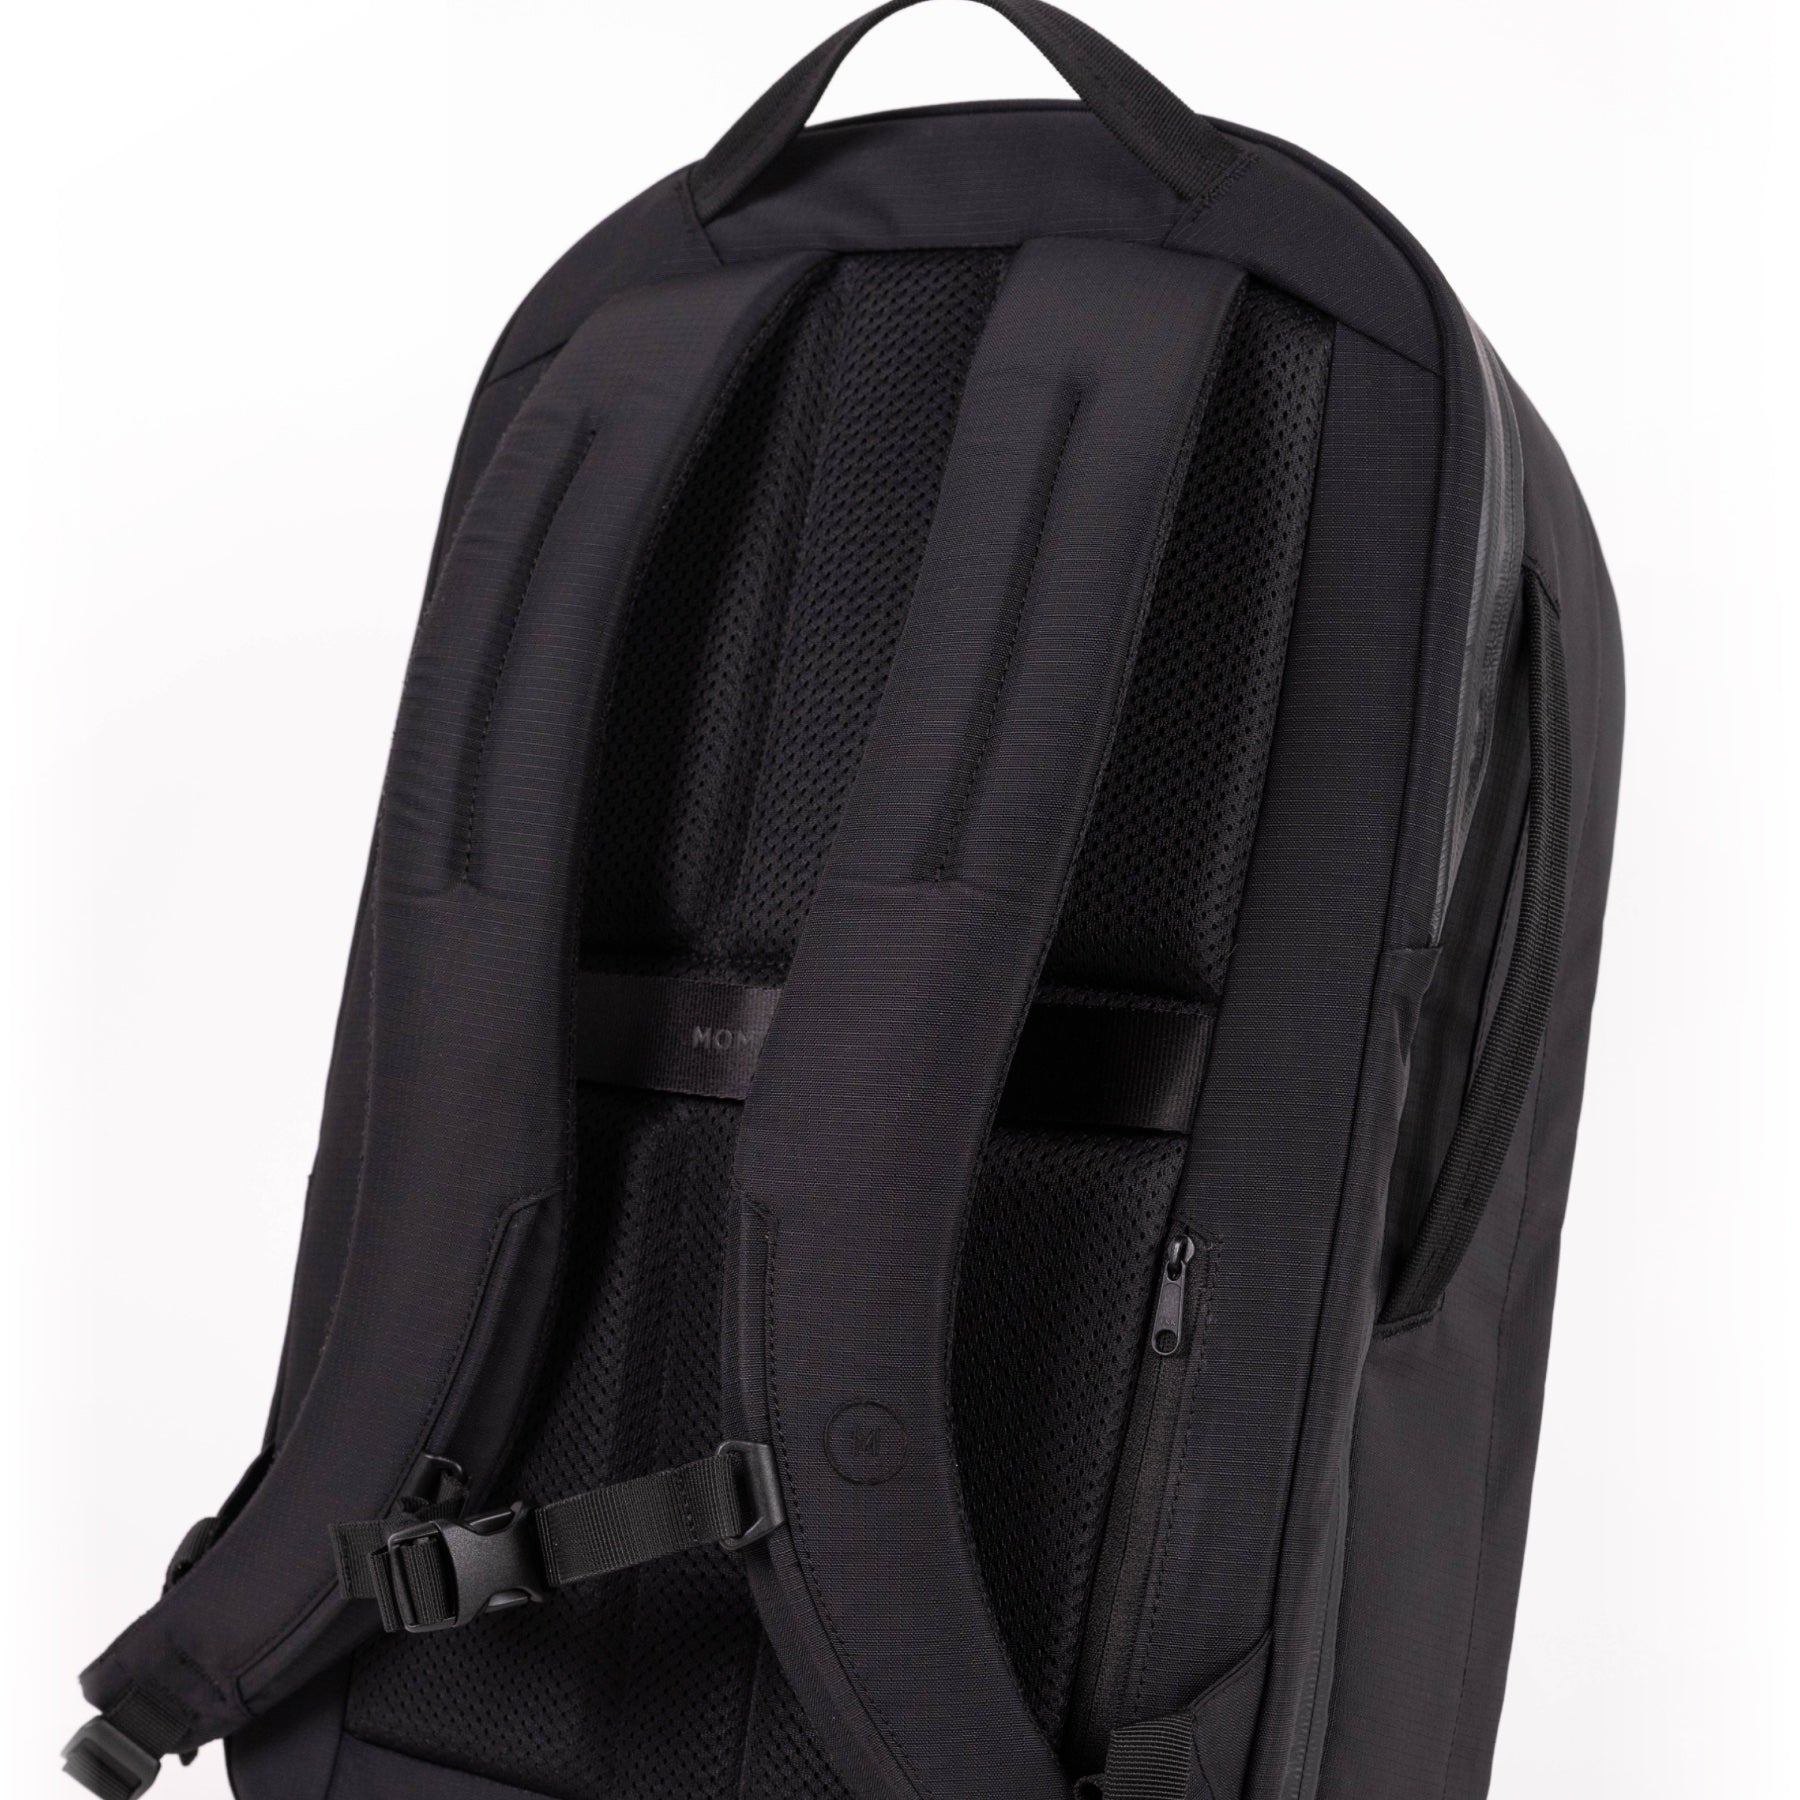 Everything Backpack 28L - Black